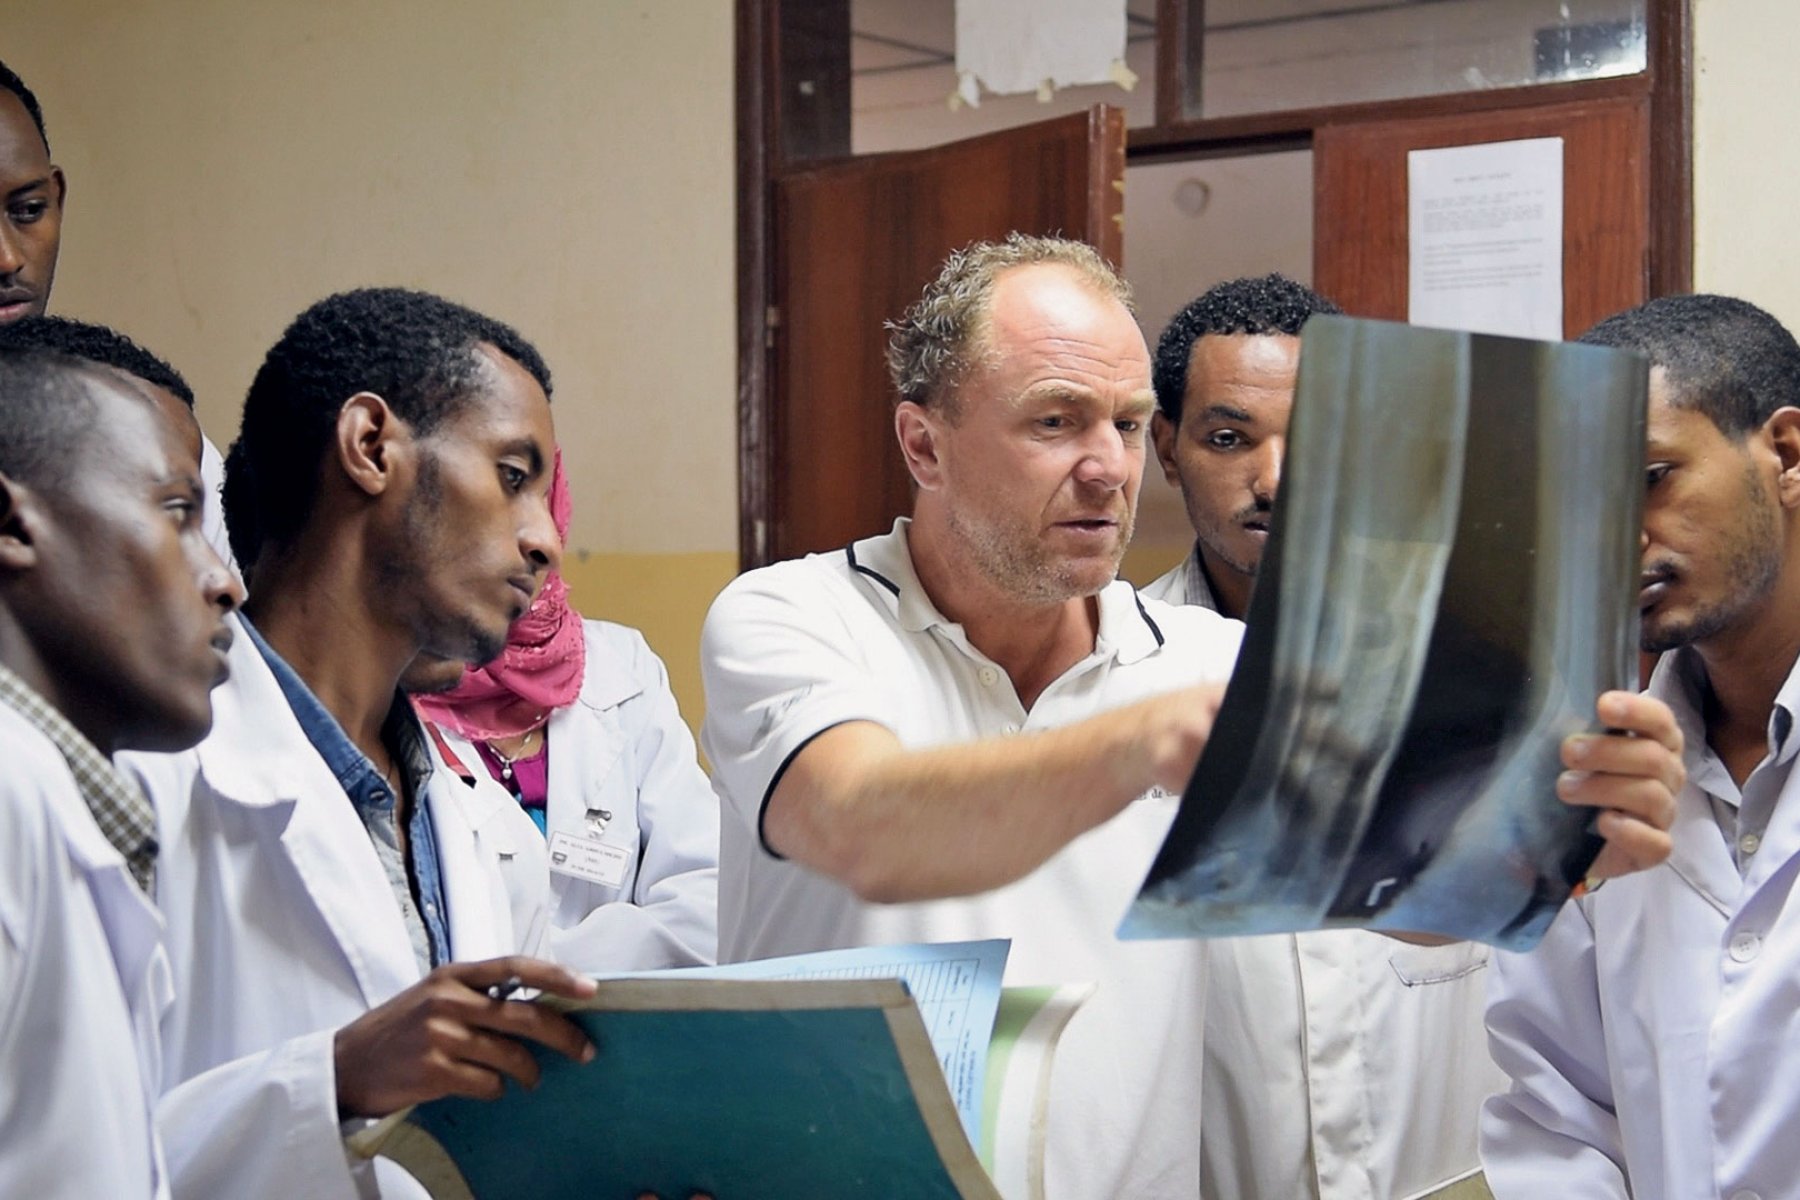 Swiss surgeons in Ethiopia